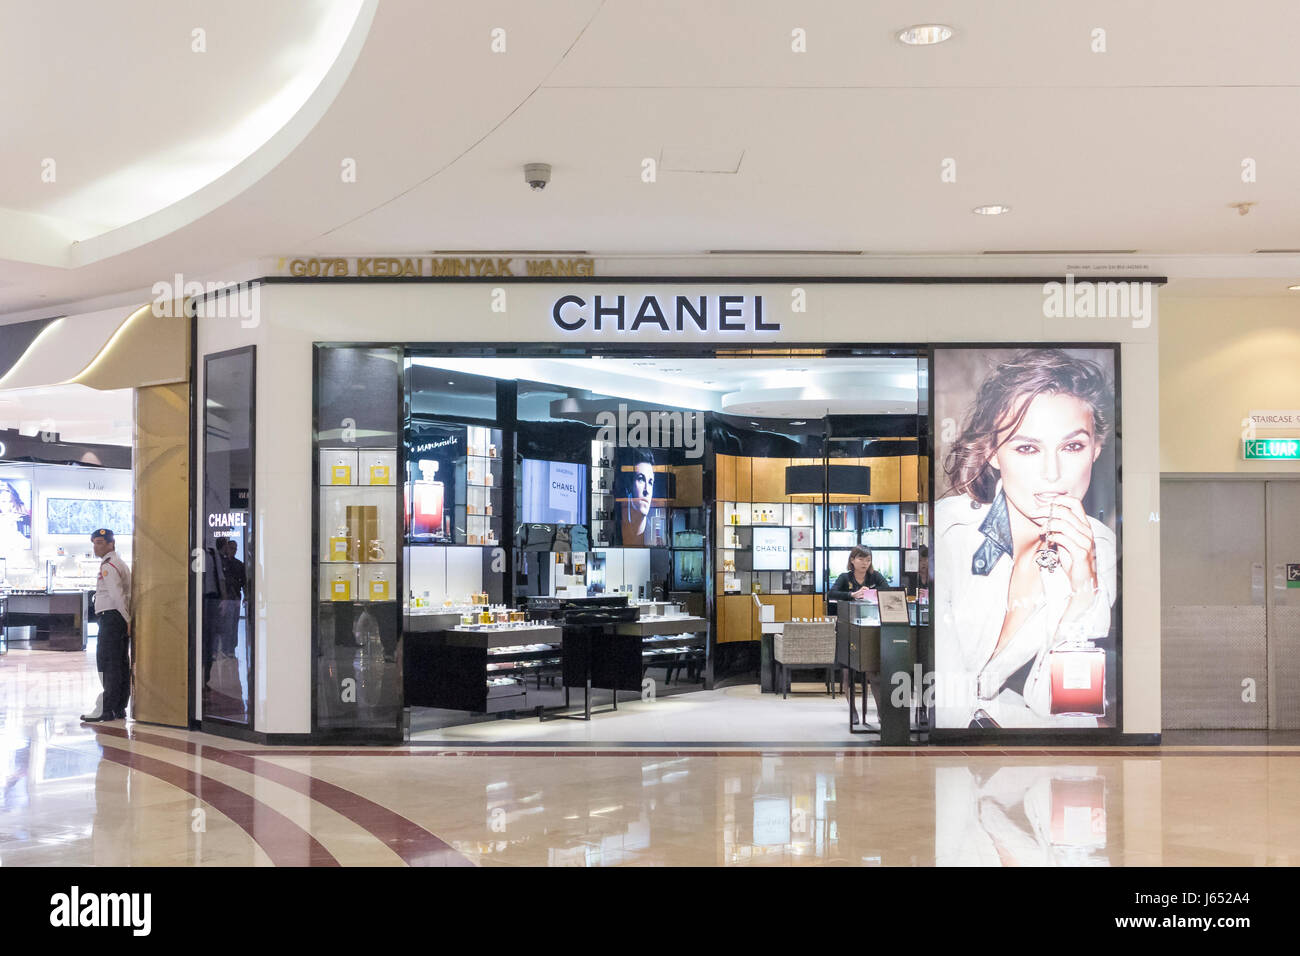 Chanel shop, Malaysia Stock Photo - Alamy